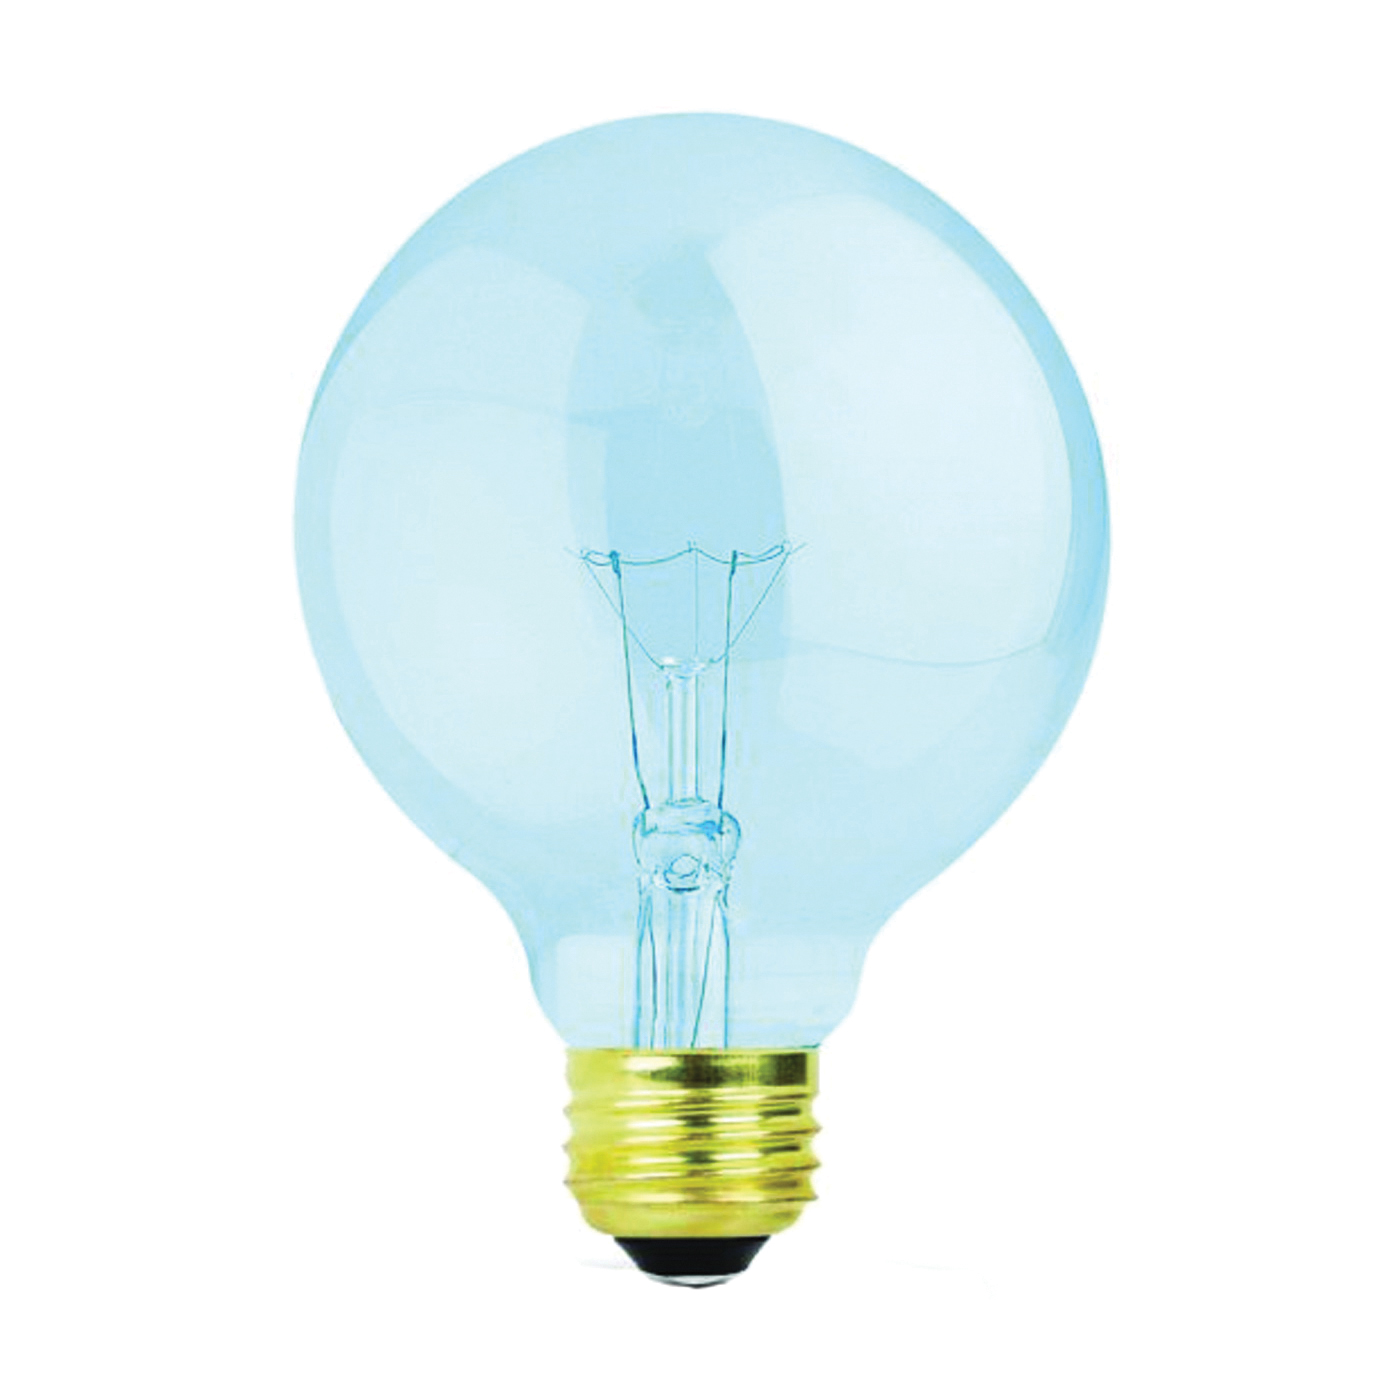 40G25/N/RP Incandescent Bulb, 40 W, G25 Lamp, Medium E26 Lamp Base, 150 Lumens, 3000 K Color Temp